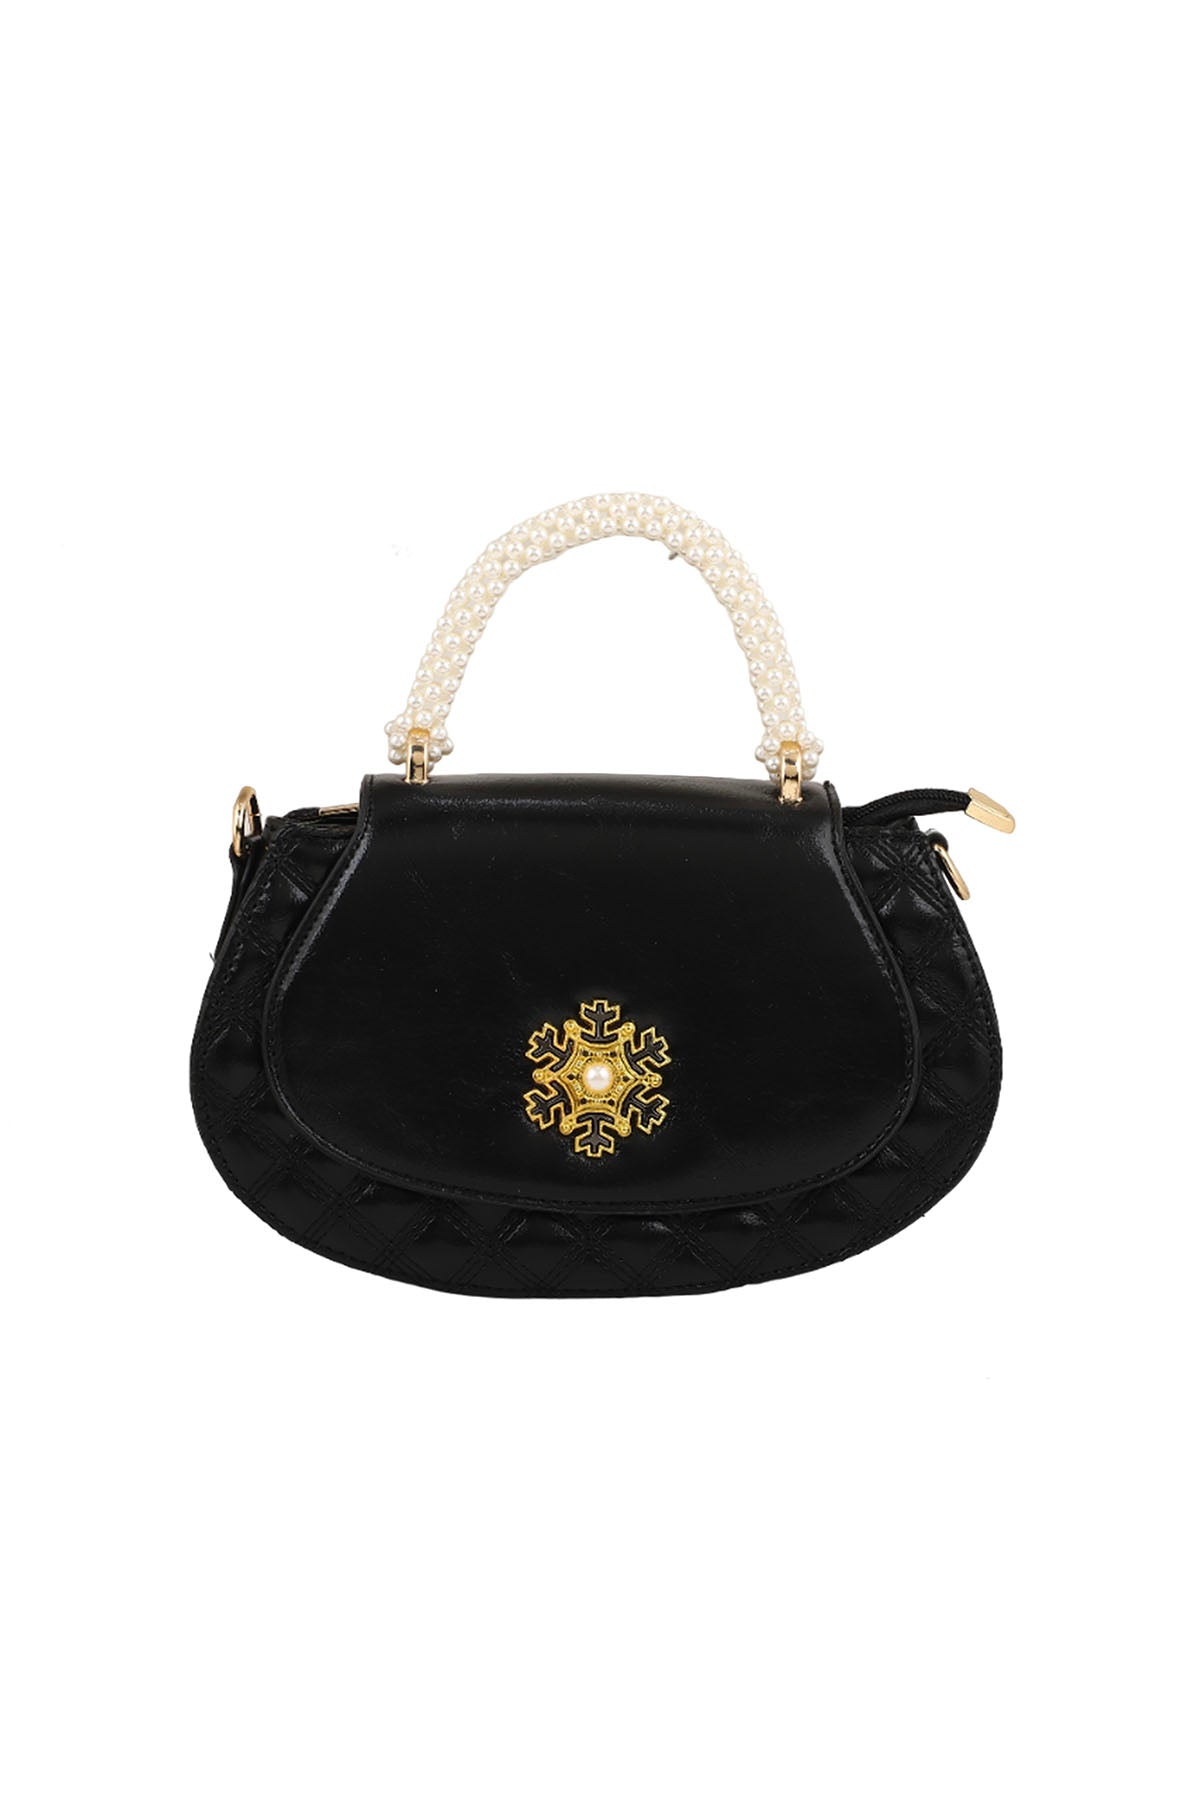 Top Handle Hand Bags B15079-Black